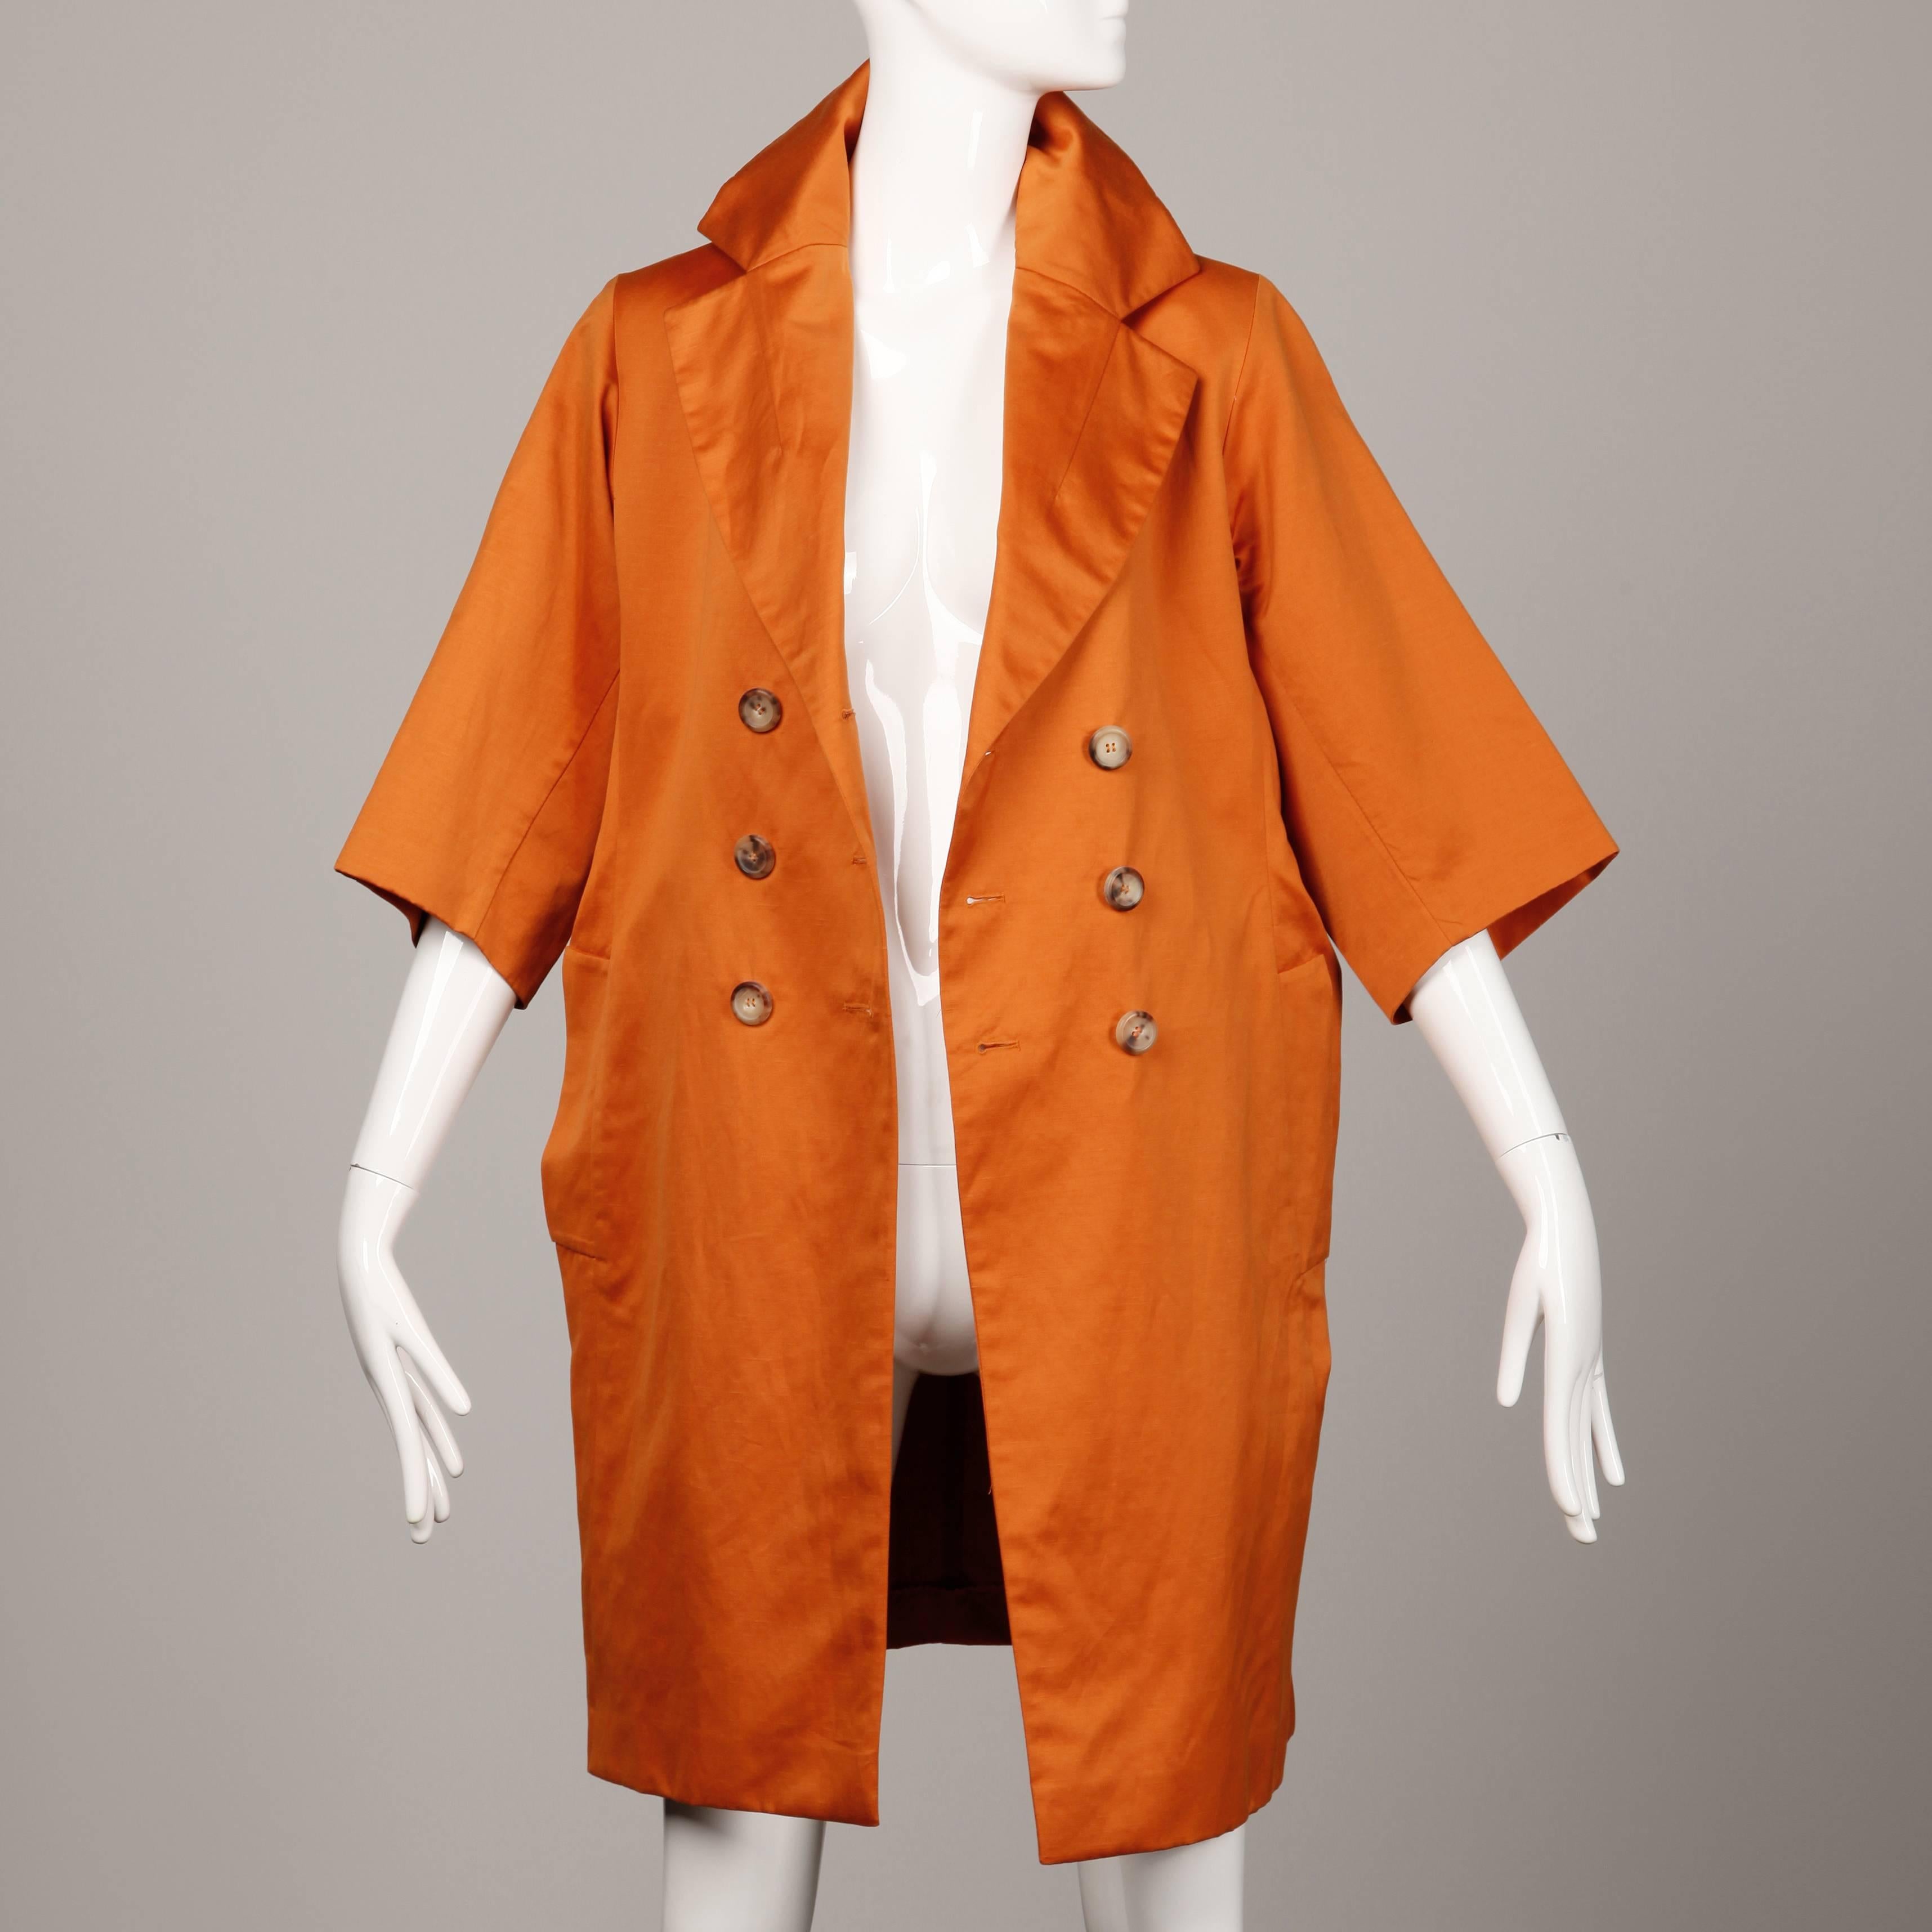 Yves Saint Laurent Rust/ Orange Fall Trench Coat Jacket For Sale 1